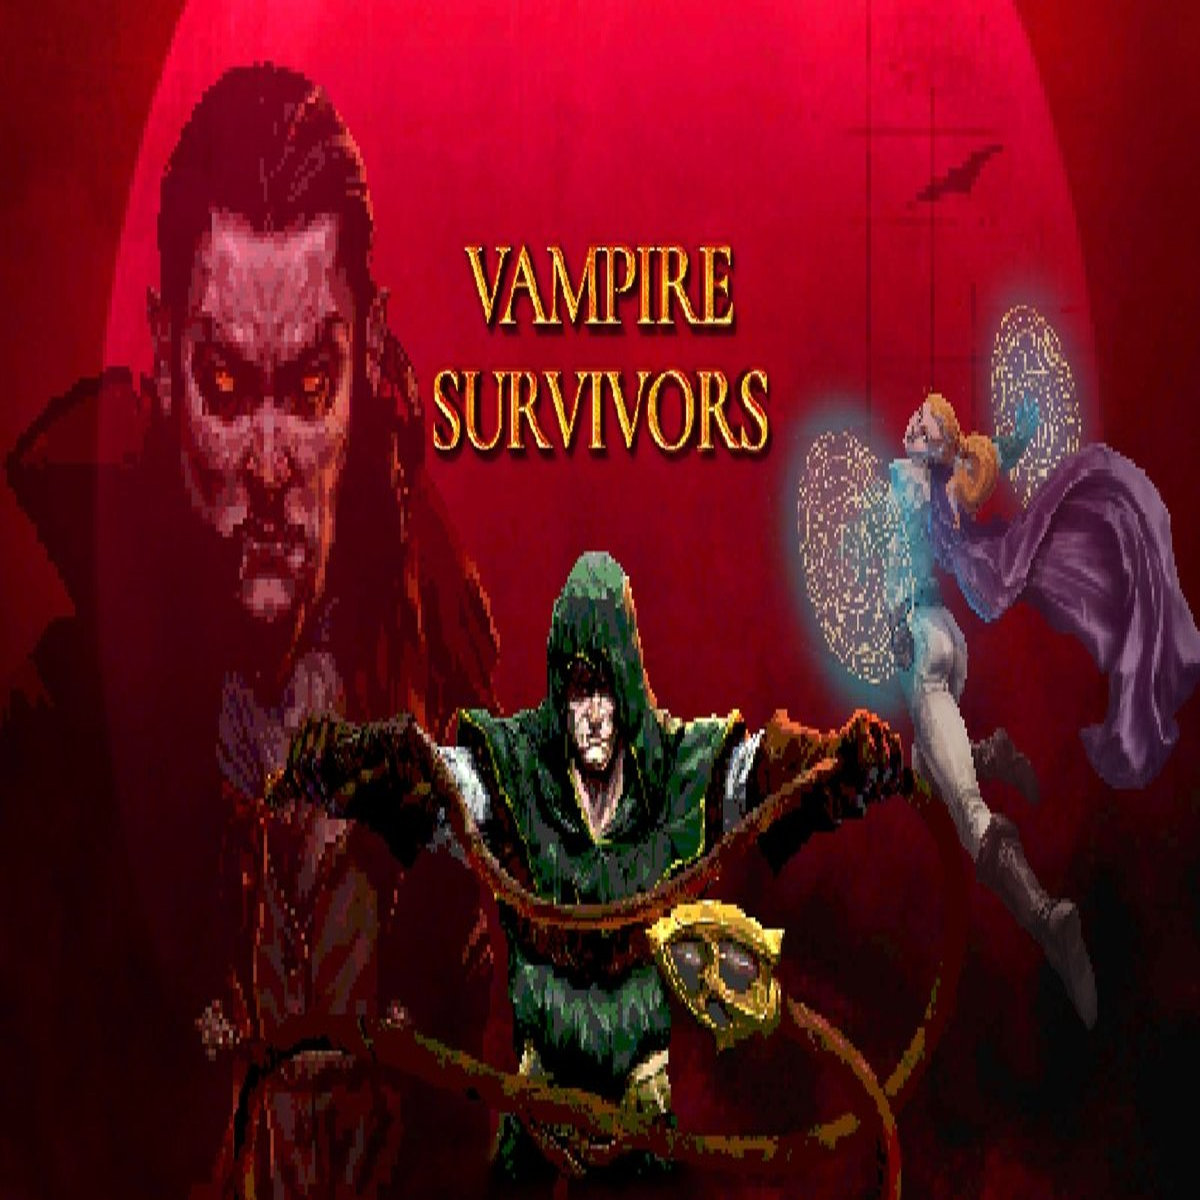 Vampire Survivors: como baixar e jogar o game no PC, Xbox ou celular